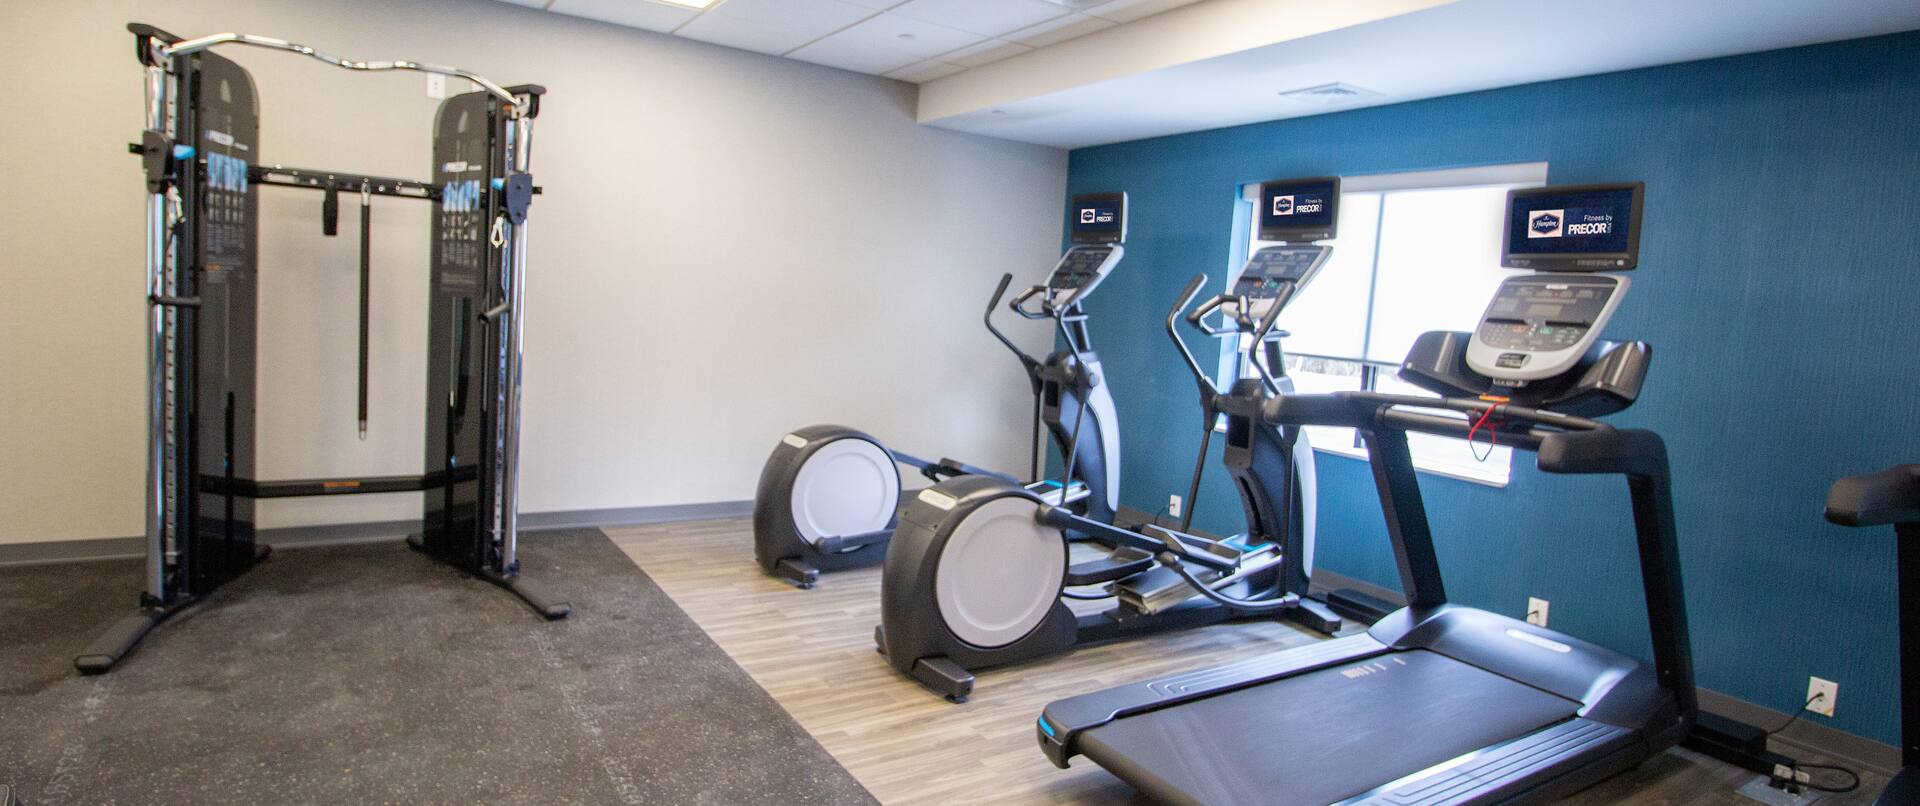 On-Site Fitness Center, Treadmills 